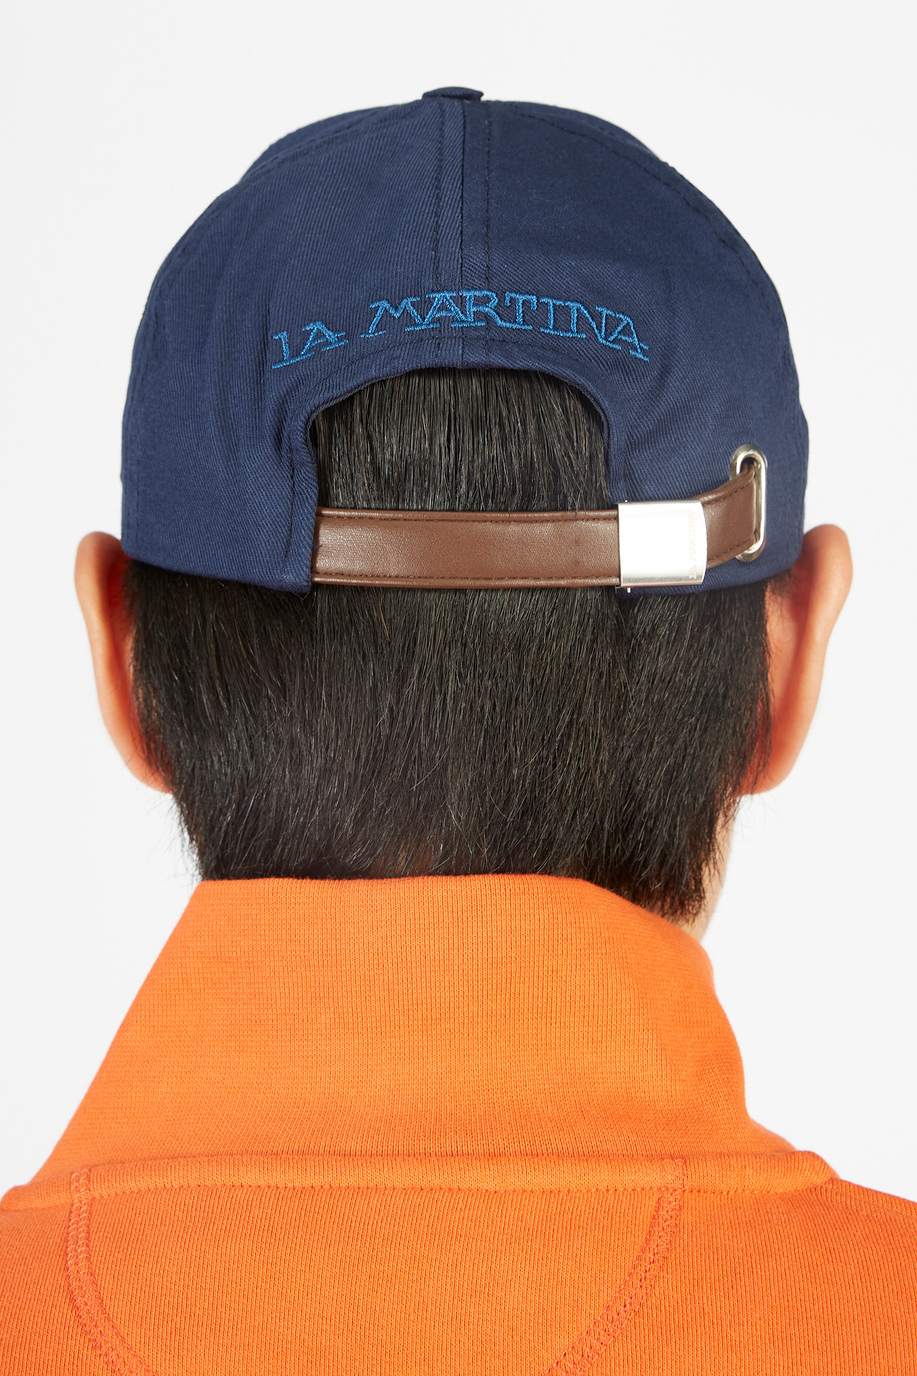 Unisex Baseballcap mit verstellbarem Regular Fit Verschluss - Accessoires | La Martina - Official Online Shop